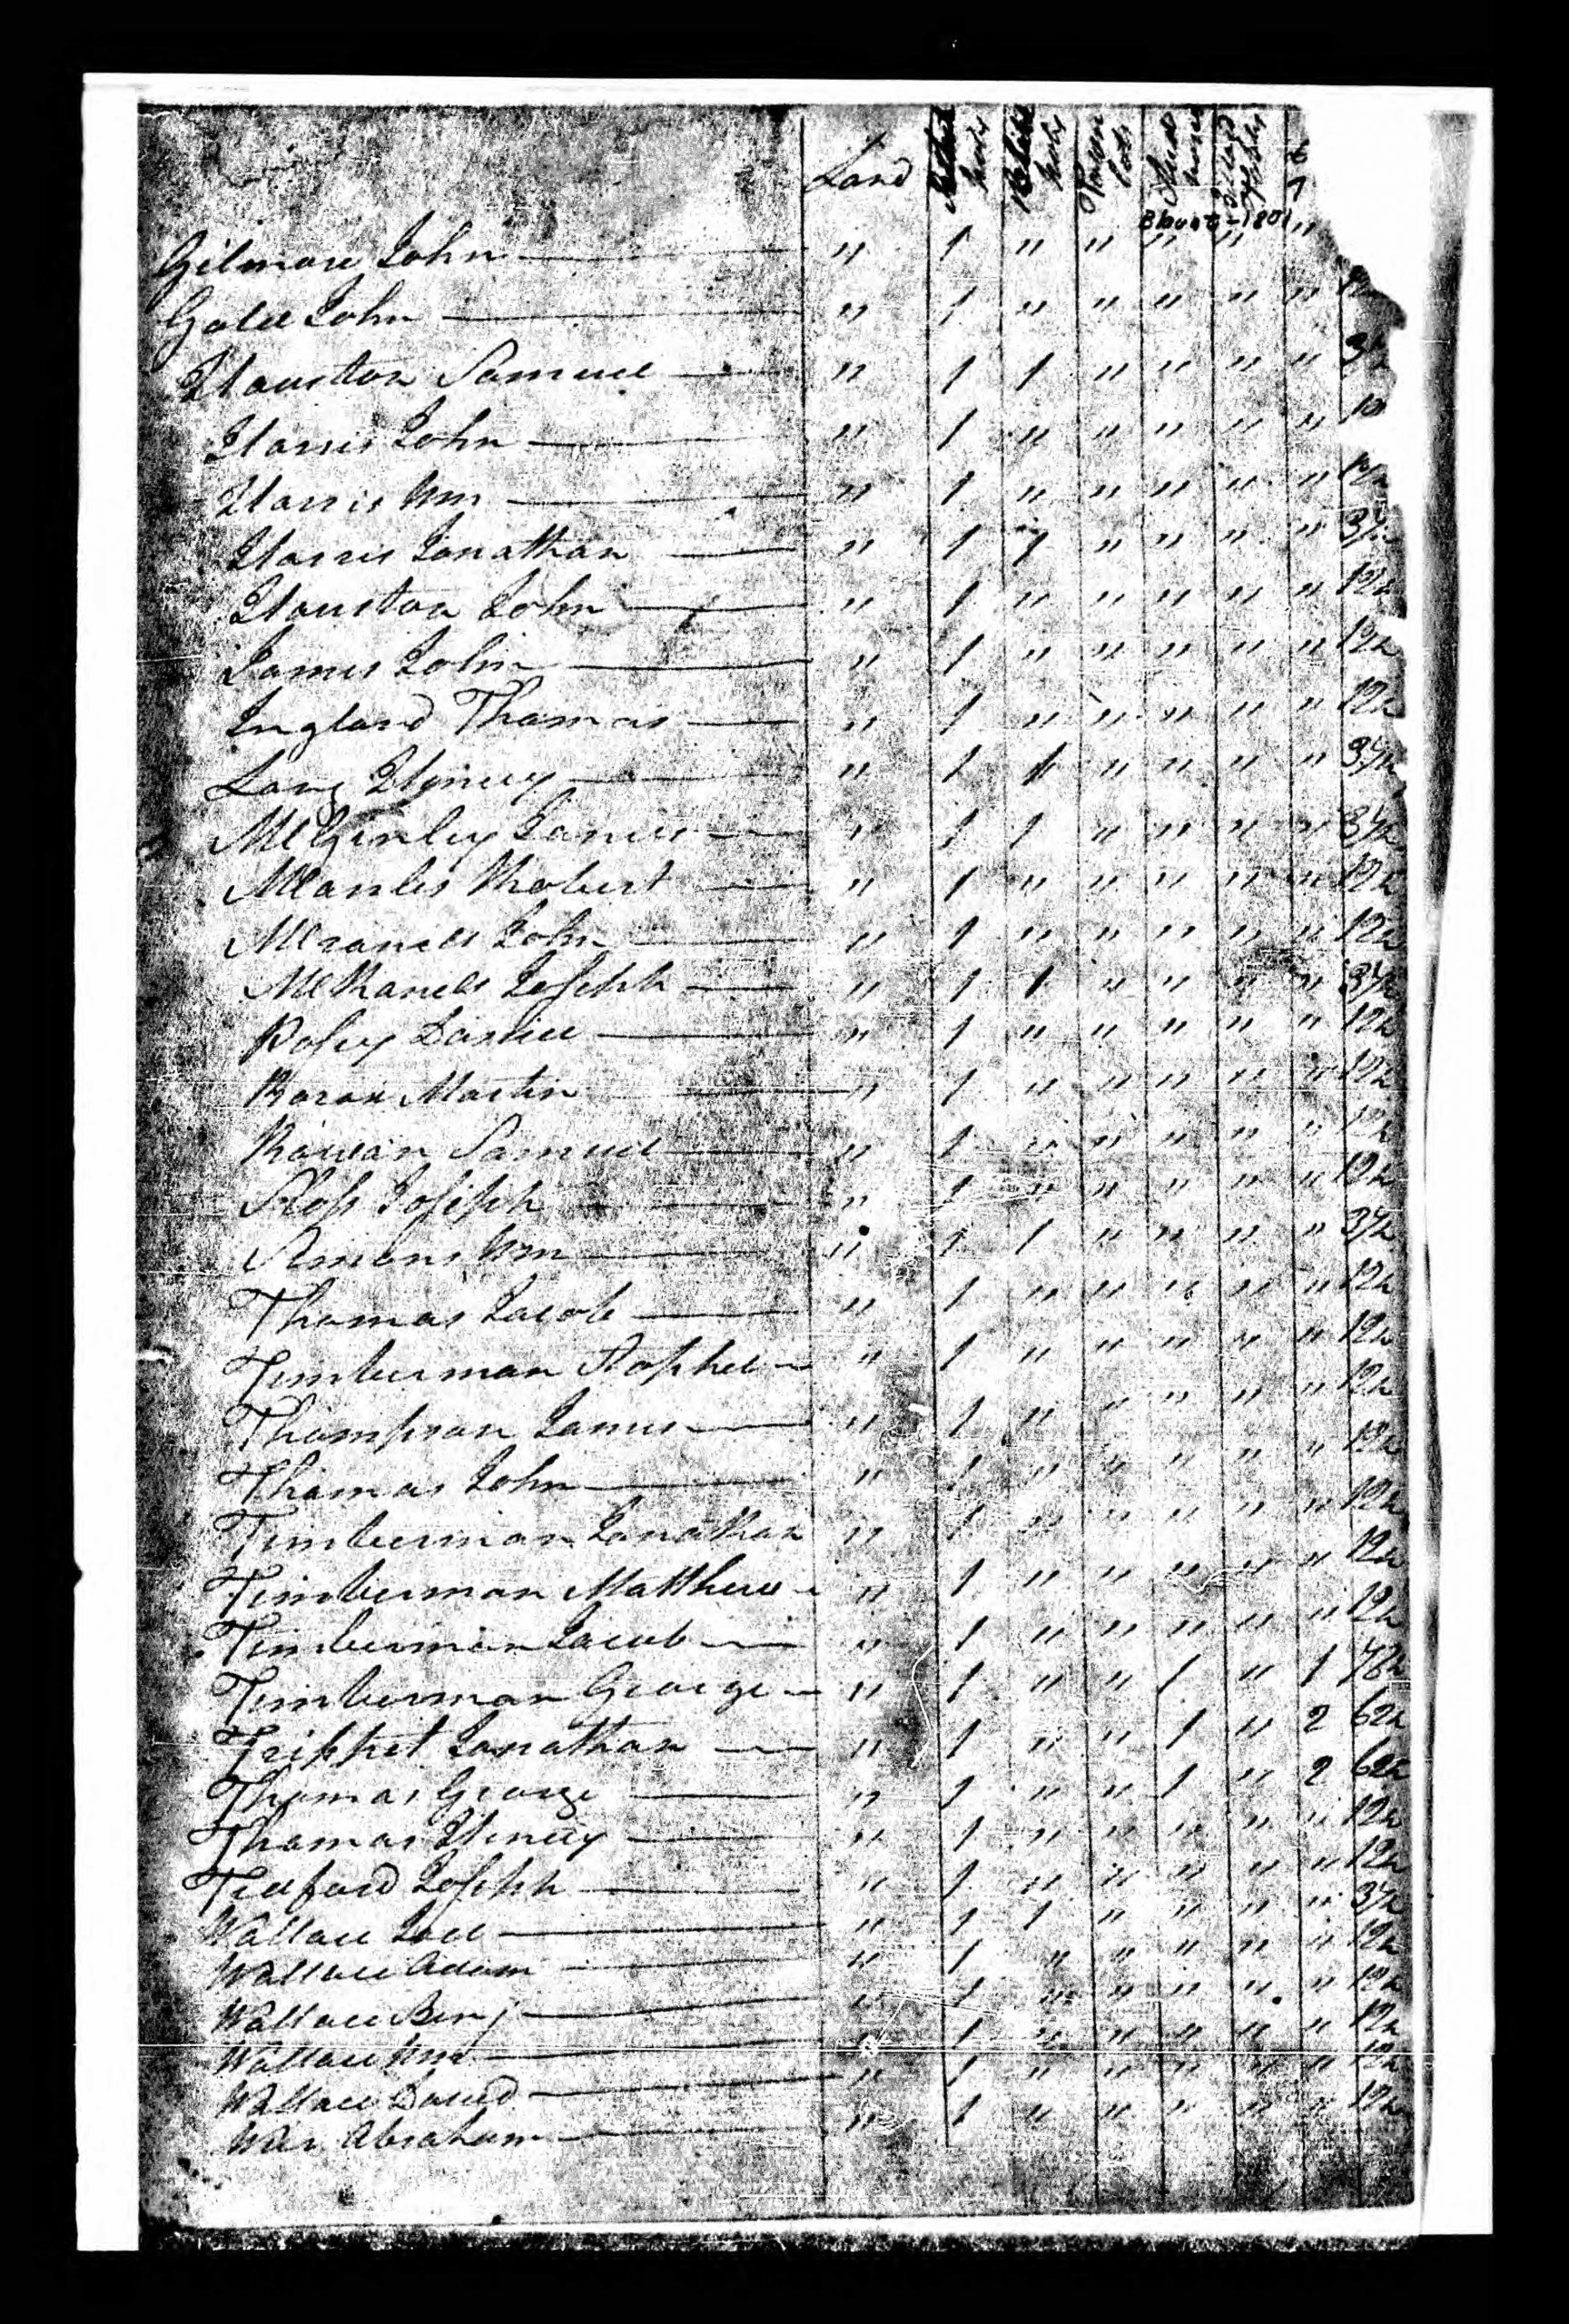 Blount County TN 1801 Tax List - Page 07